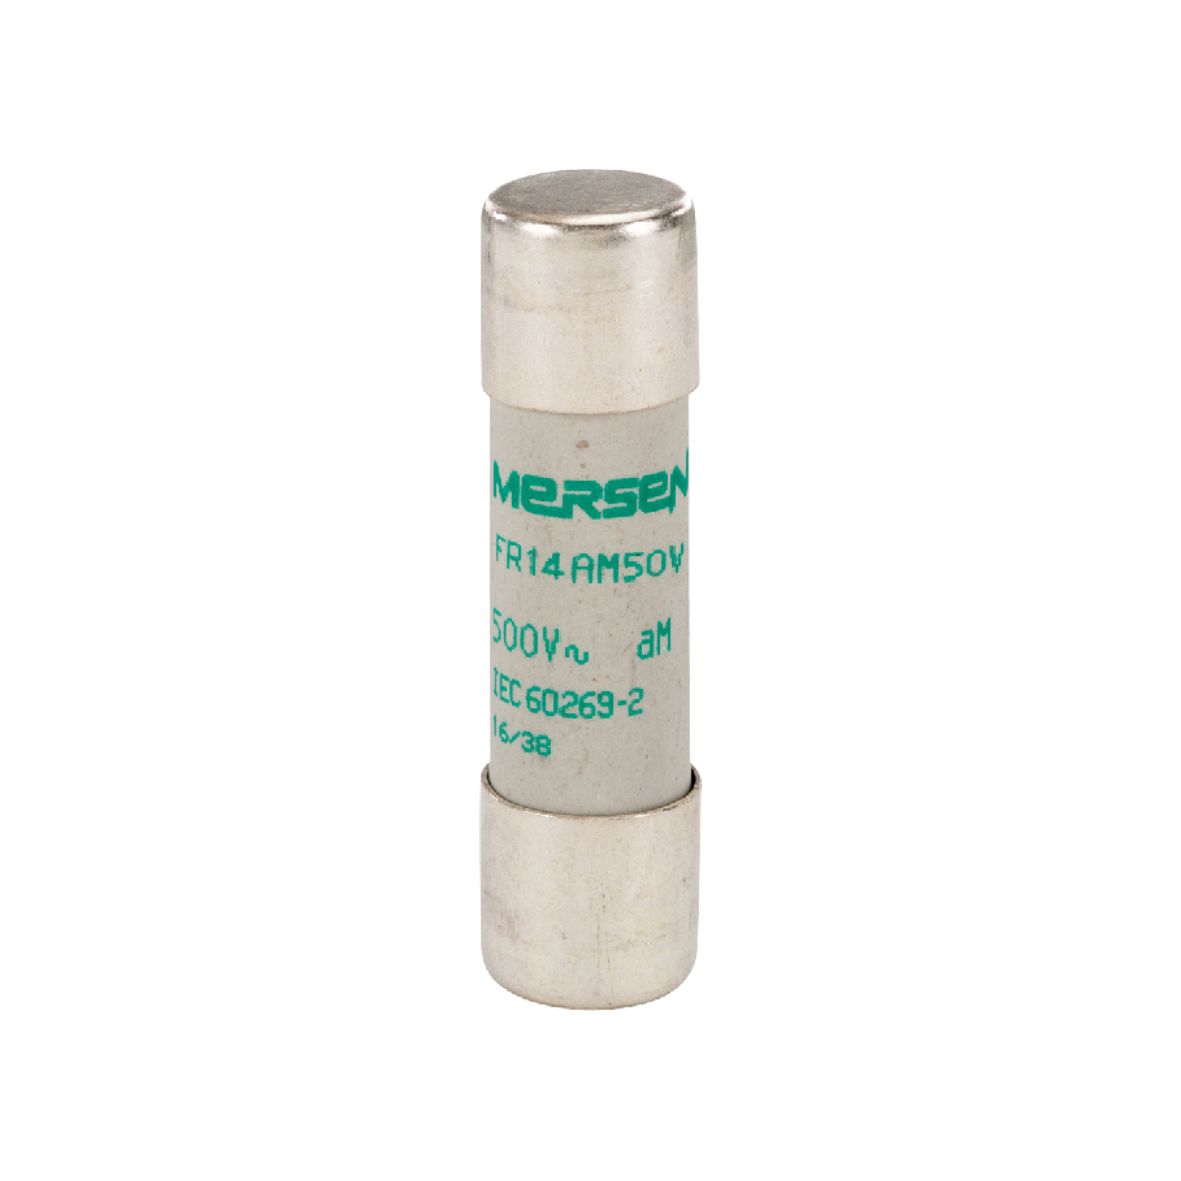 L211035 - Cylindrical fuse-link aM 500VAC 14.3x51, 45A